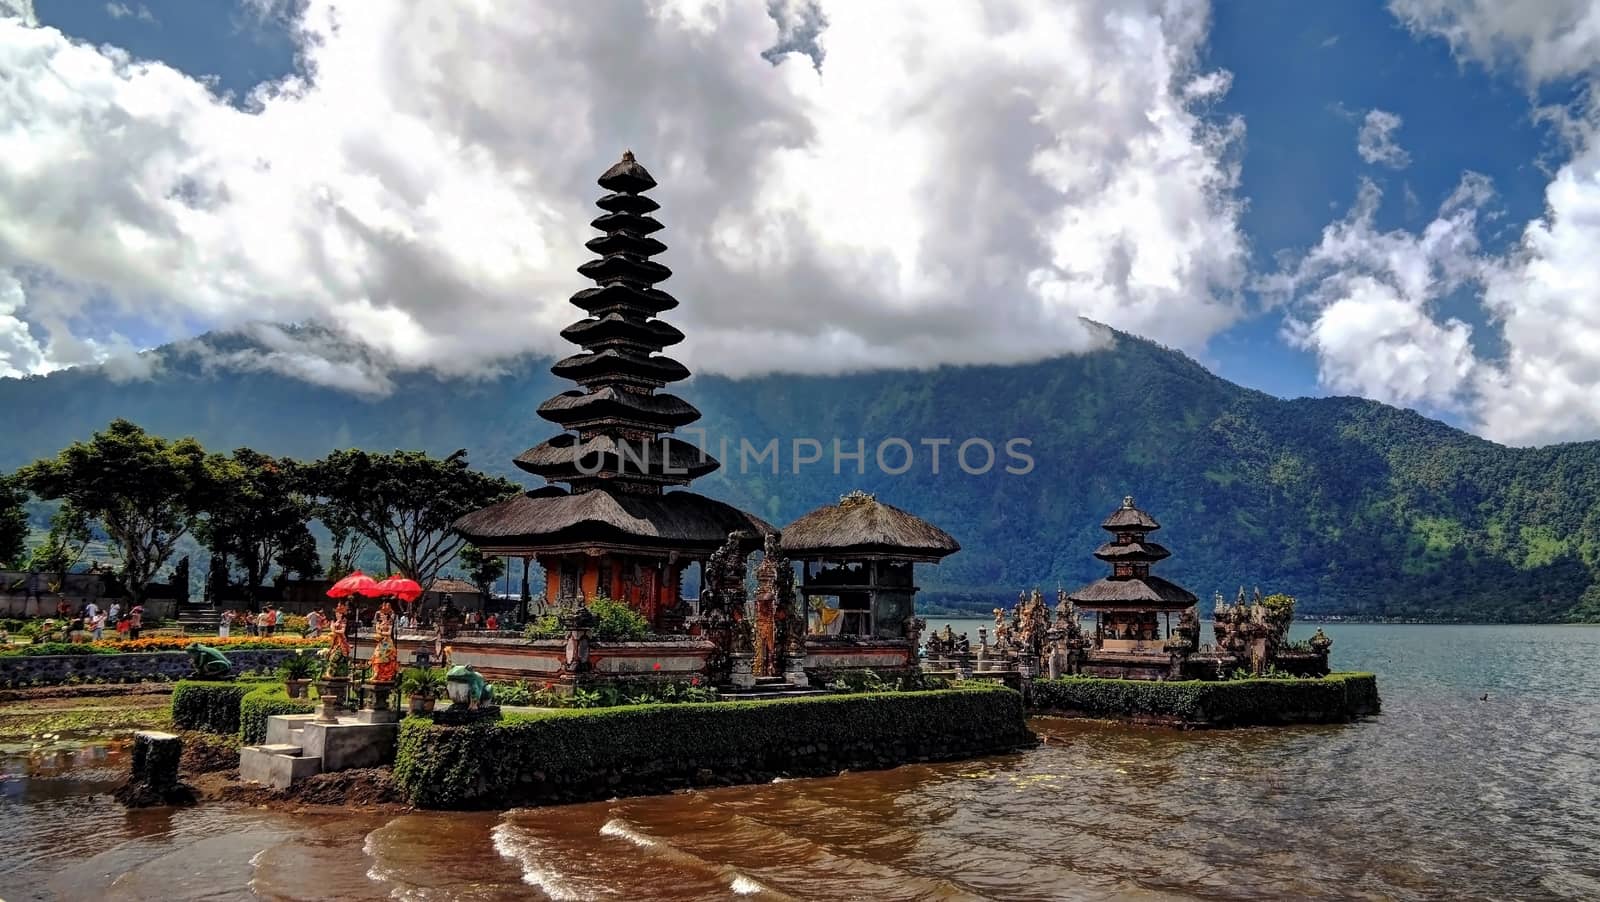 Pura Ulun Danu temple, Bali, Indonesia by homocosmicos